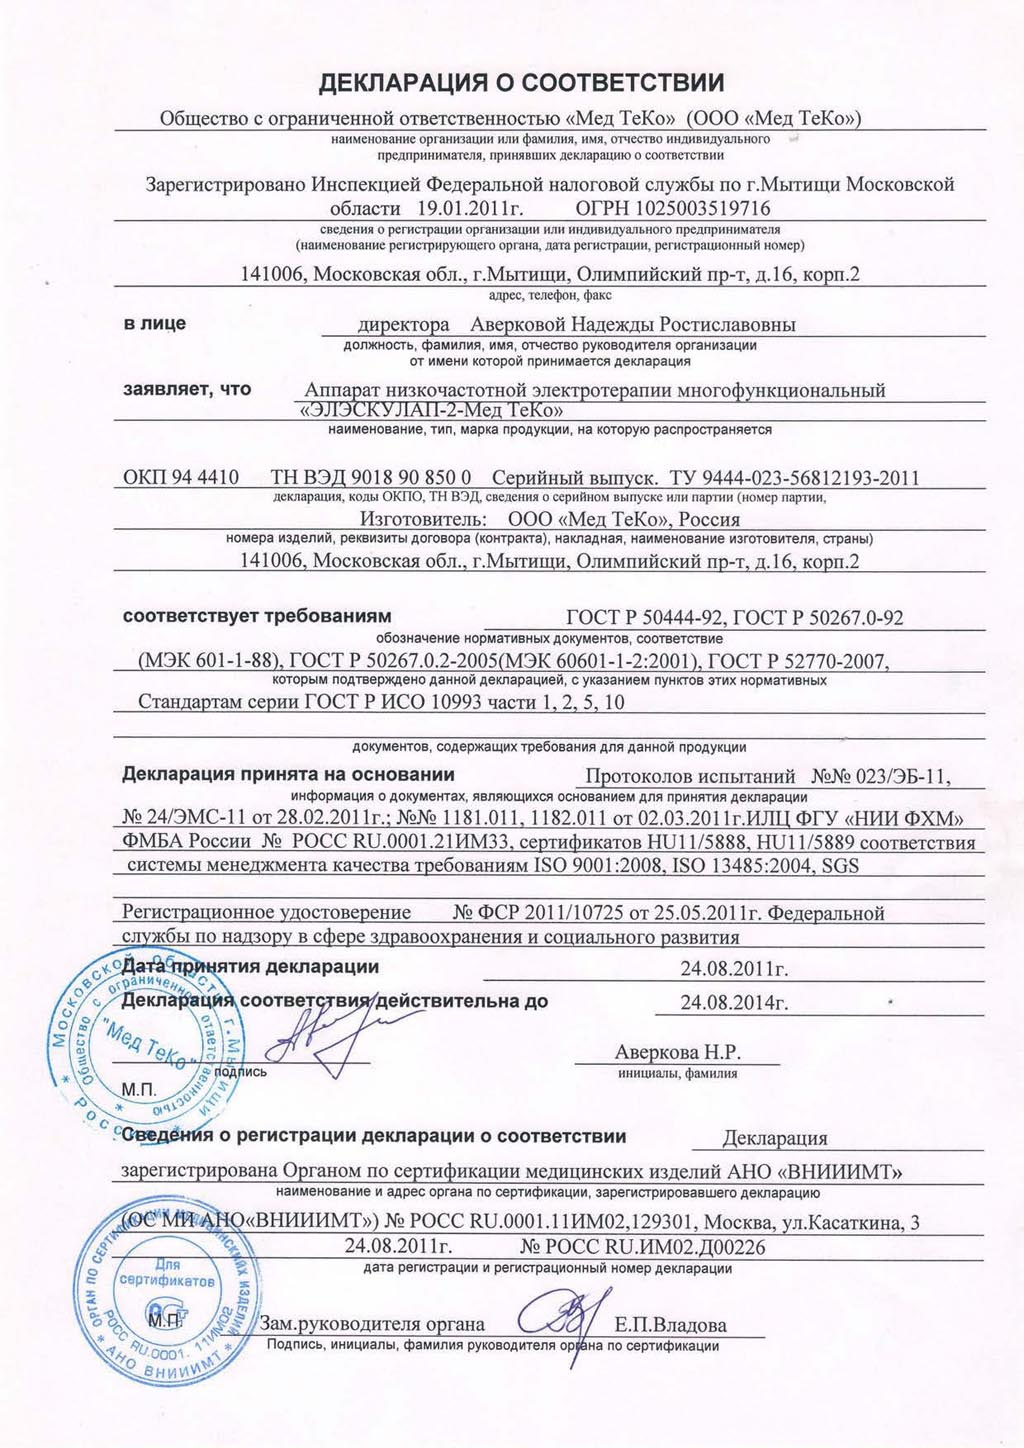 сертификат ЭЛЭСКУЛАП-2 МедТеКо